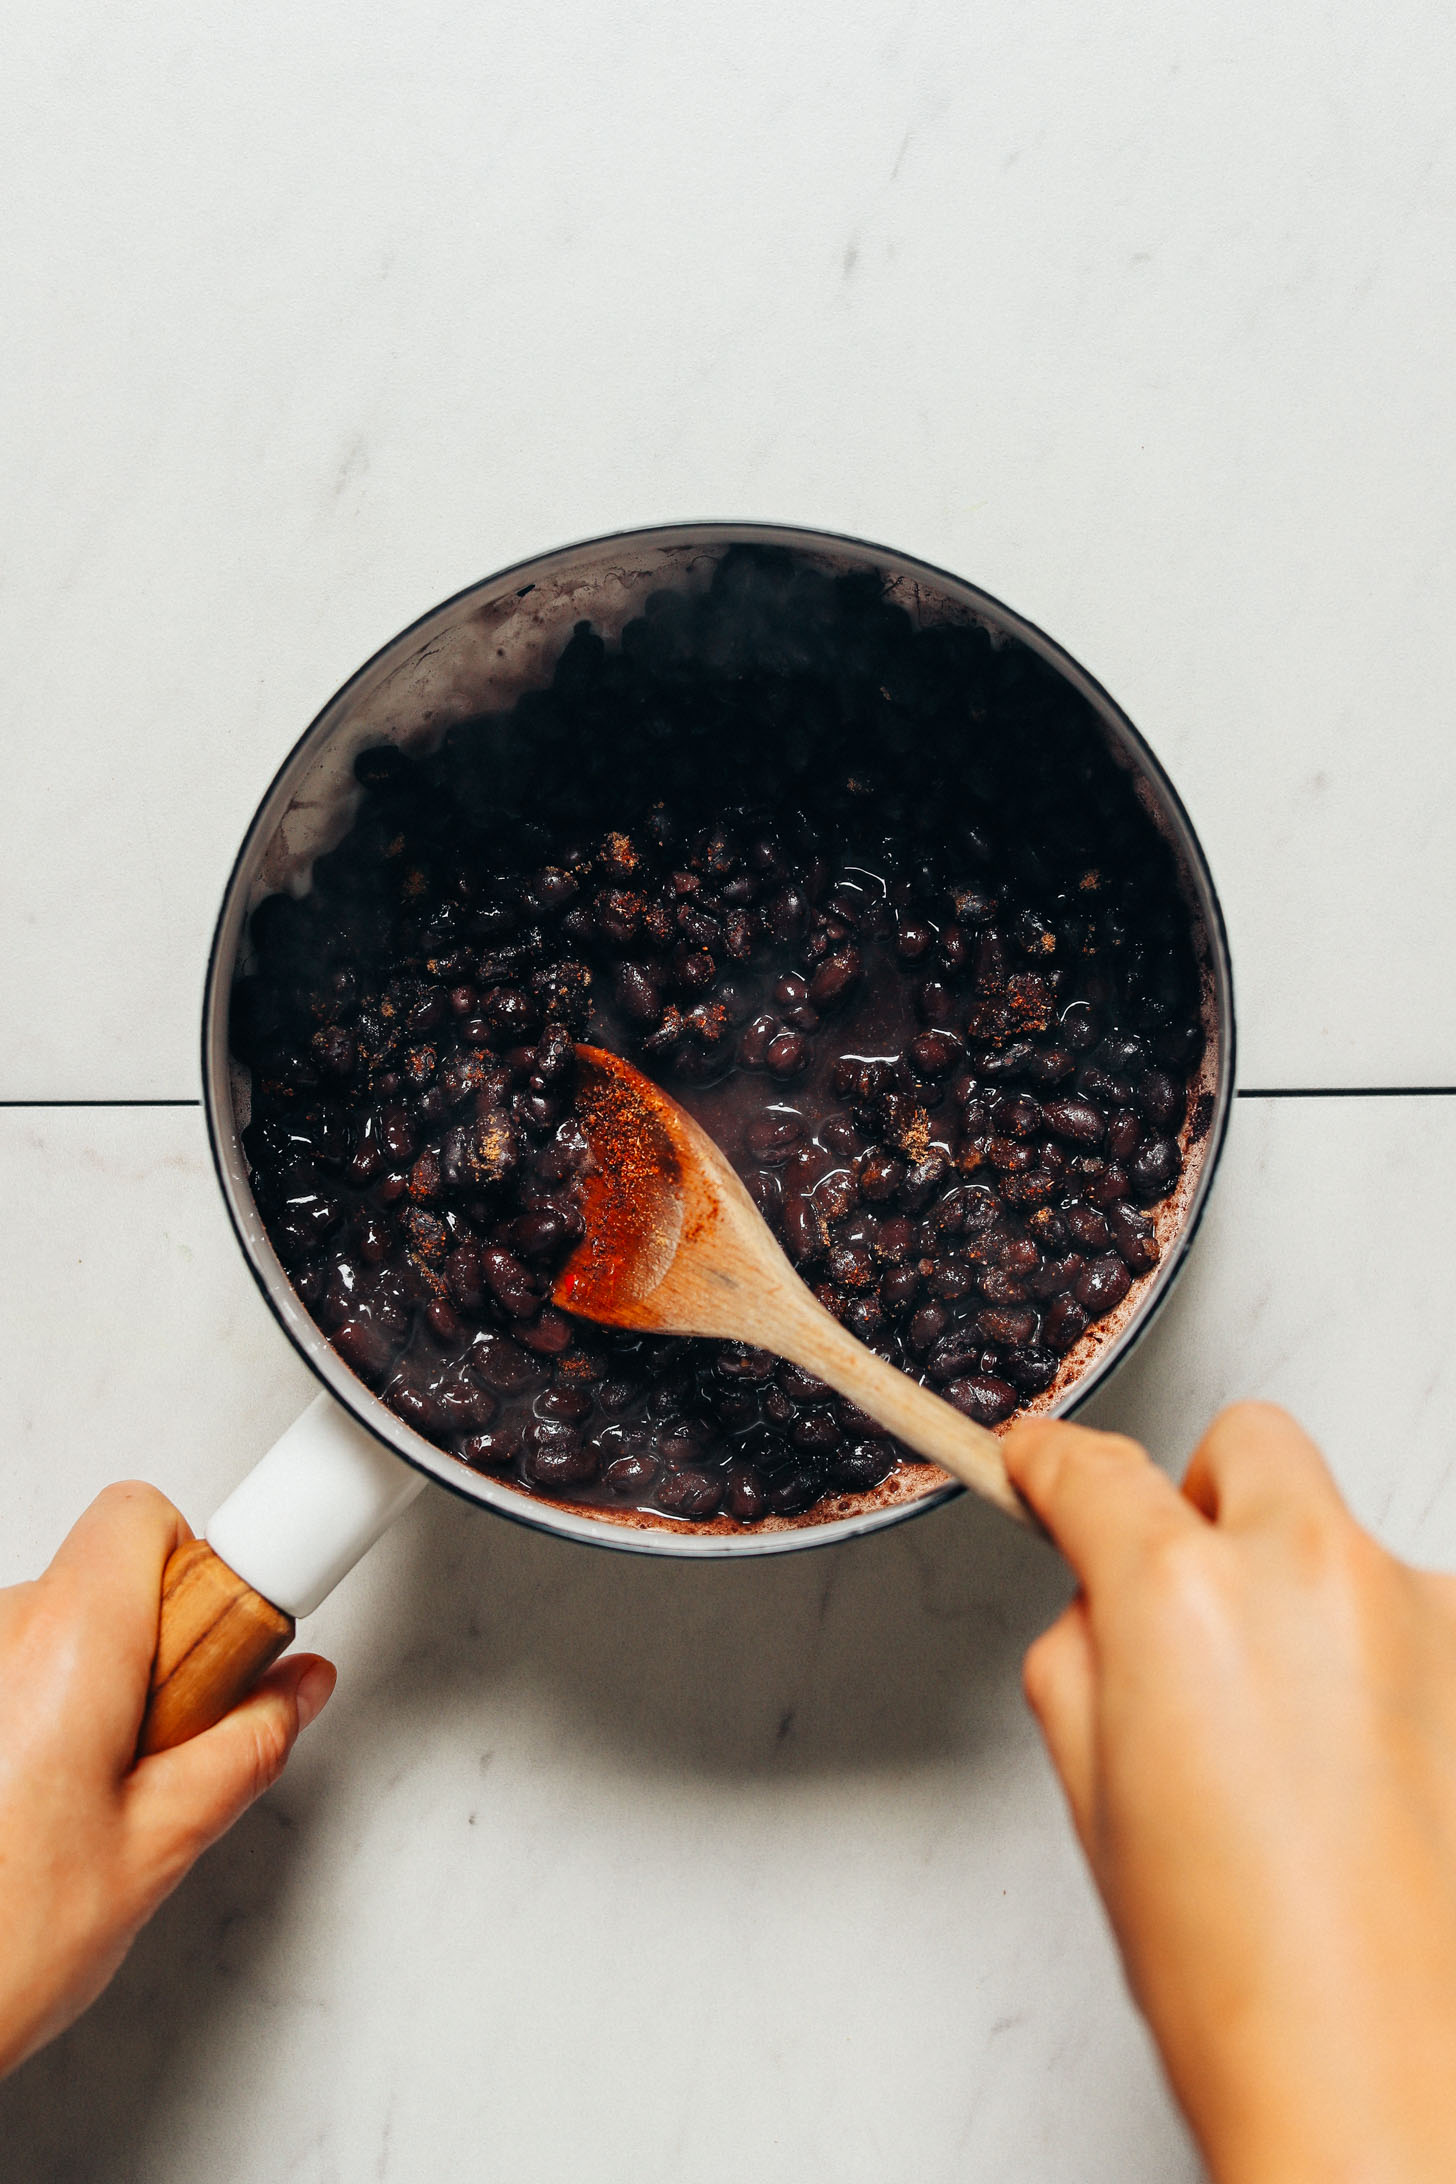 Stirring seasonings into a pot of black beans